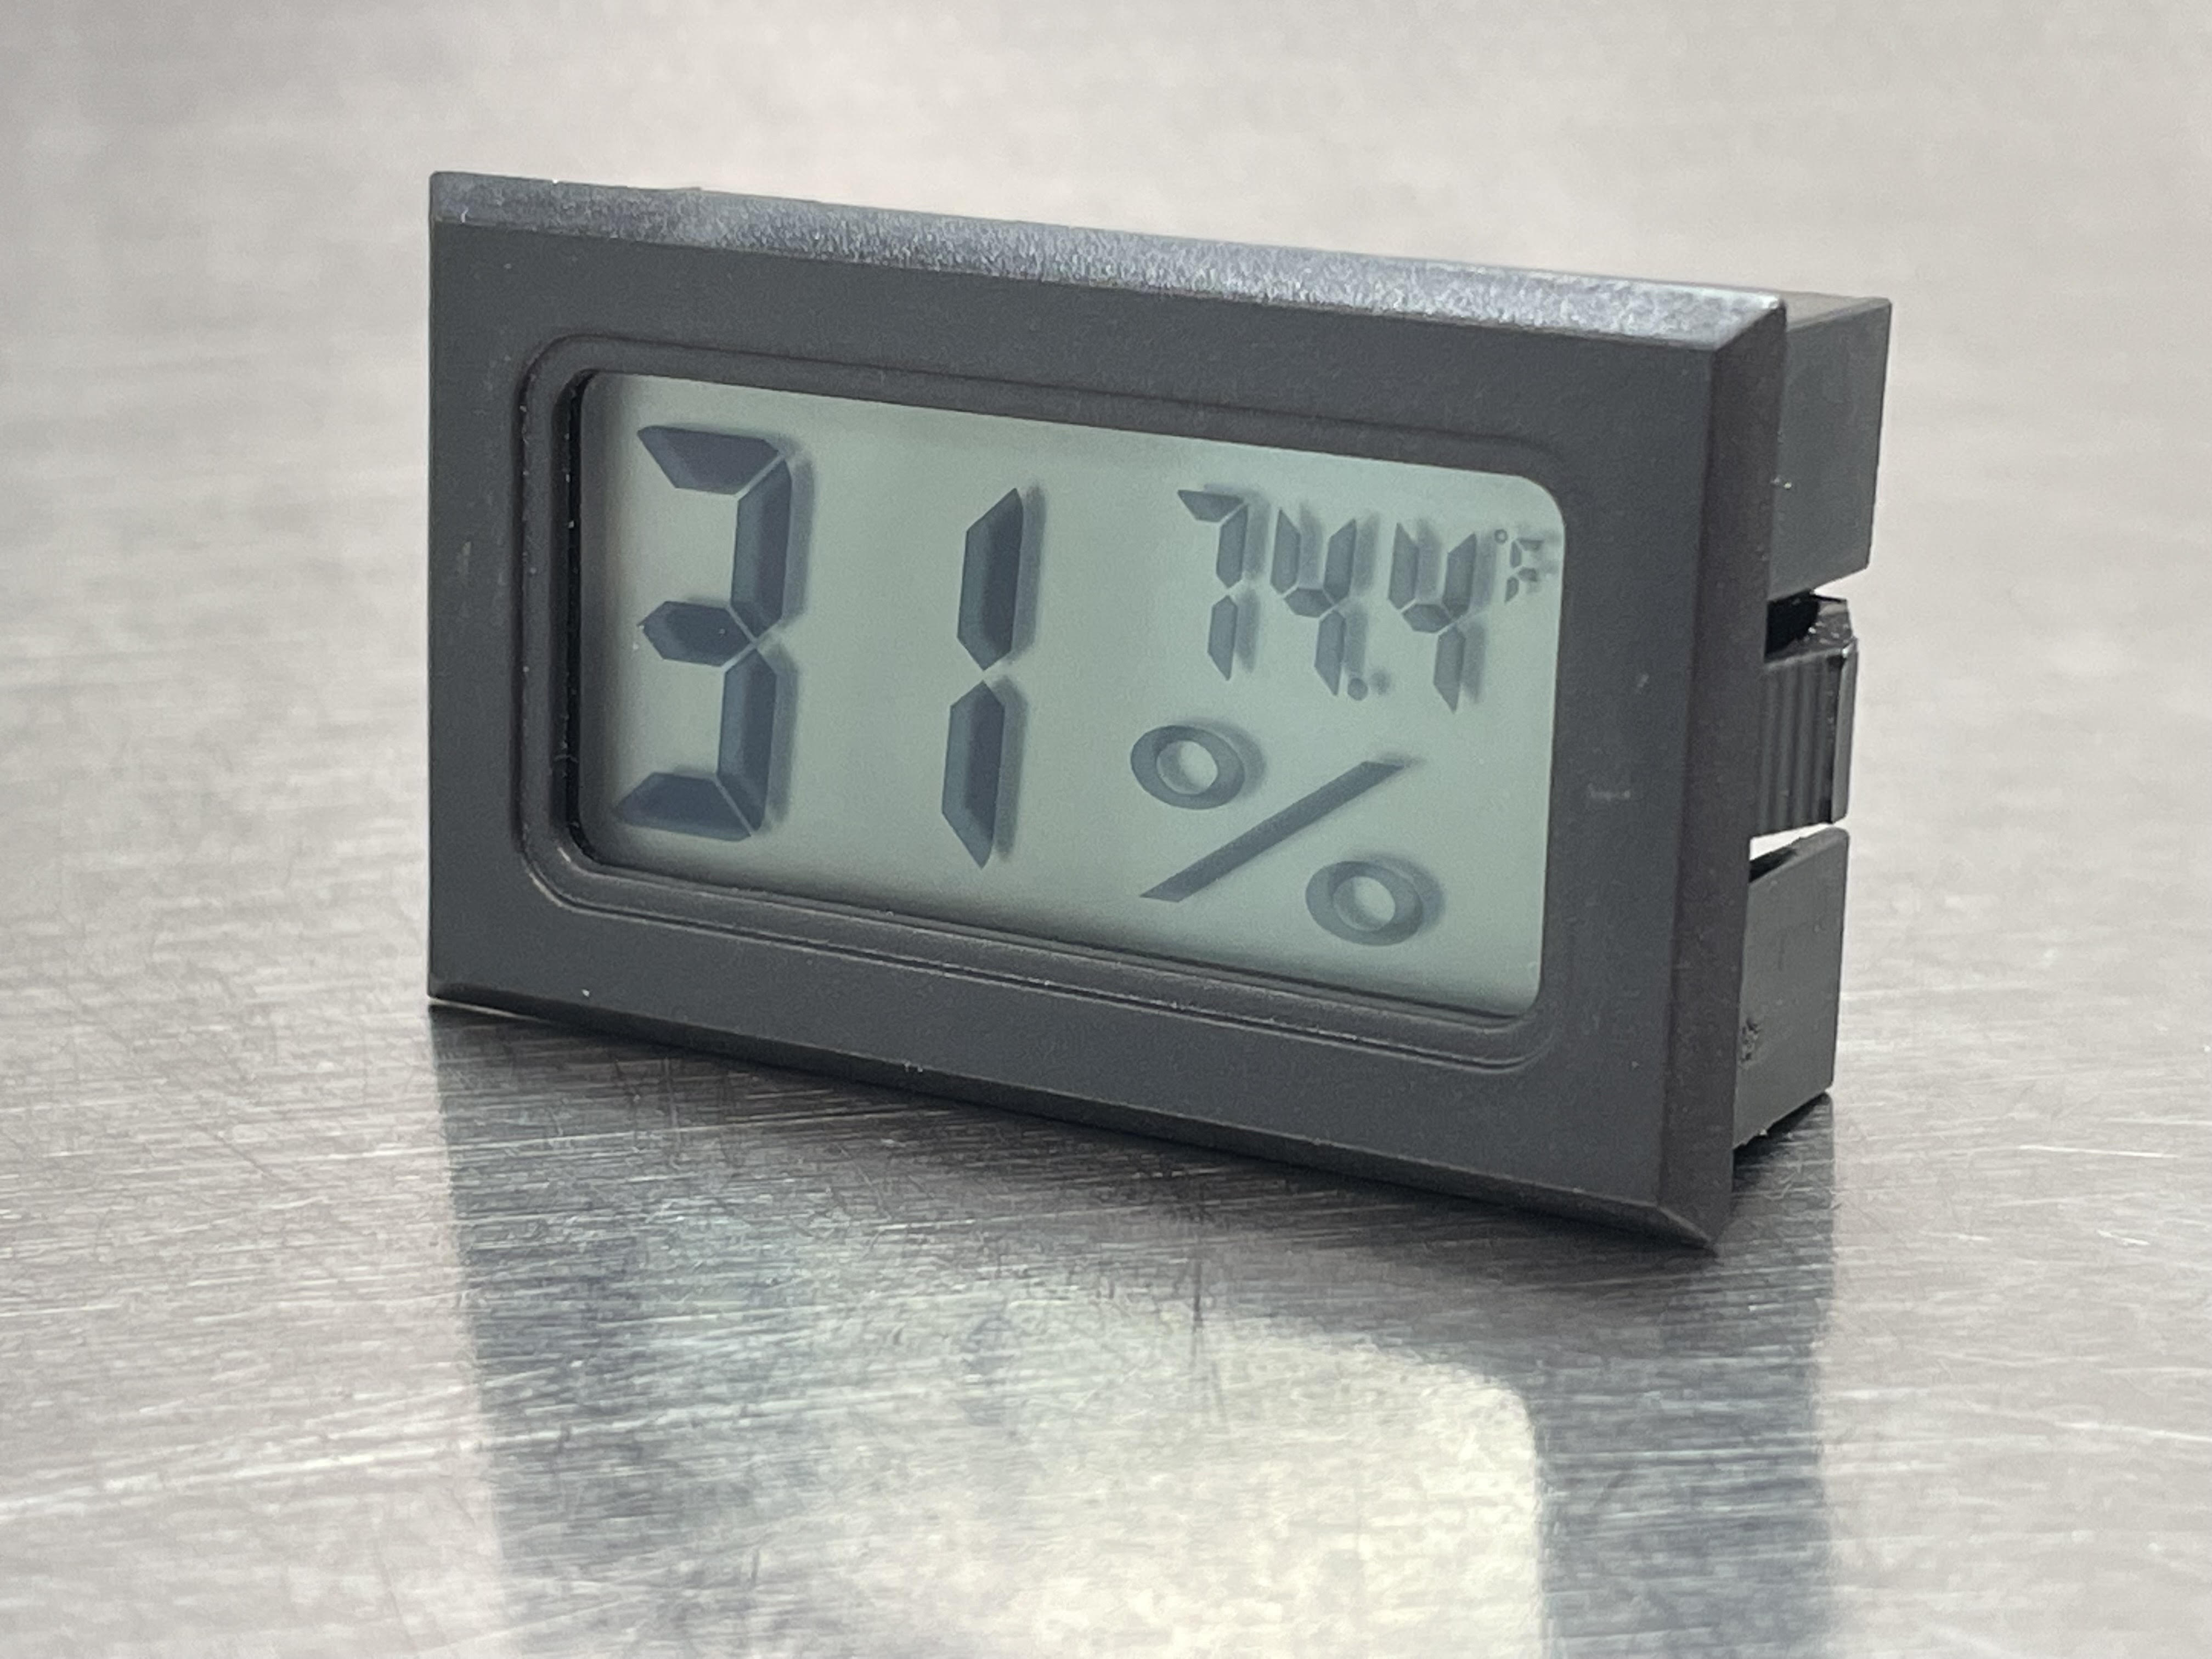 Digital Hygrometer Mini Humidity Temperature Monitor – BigFATPhids